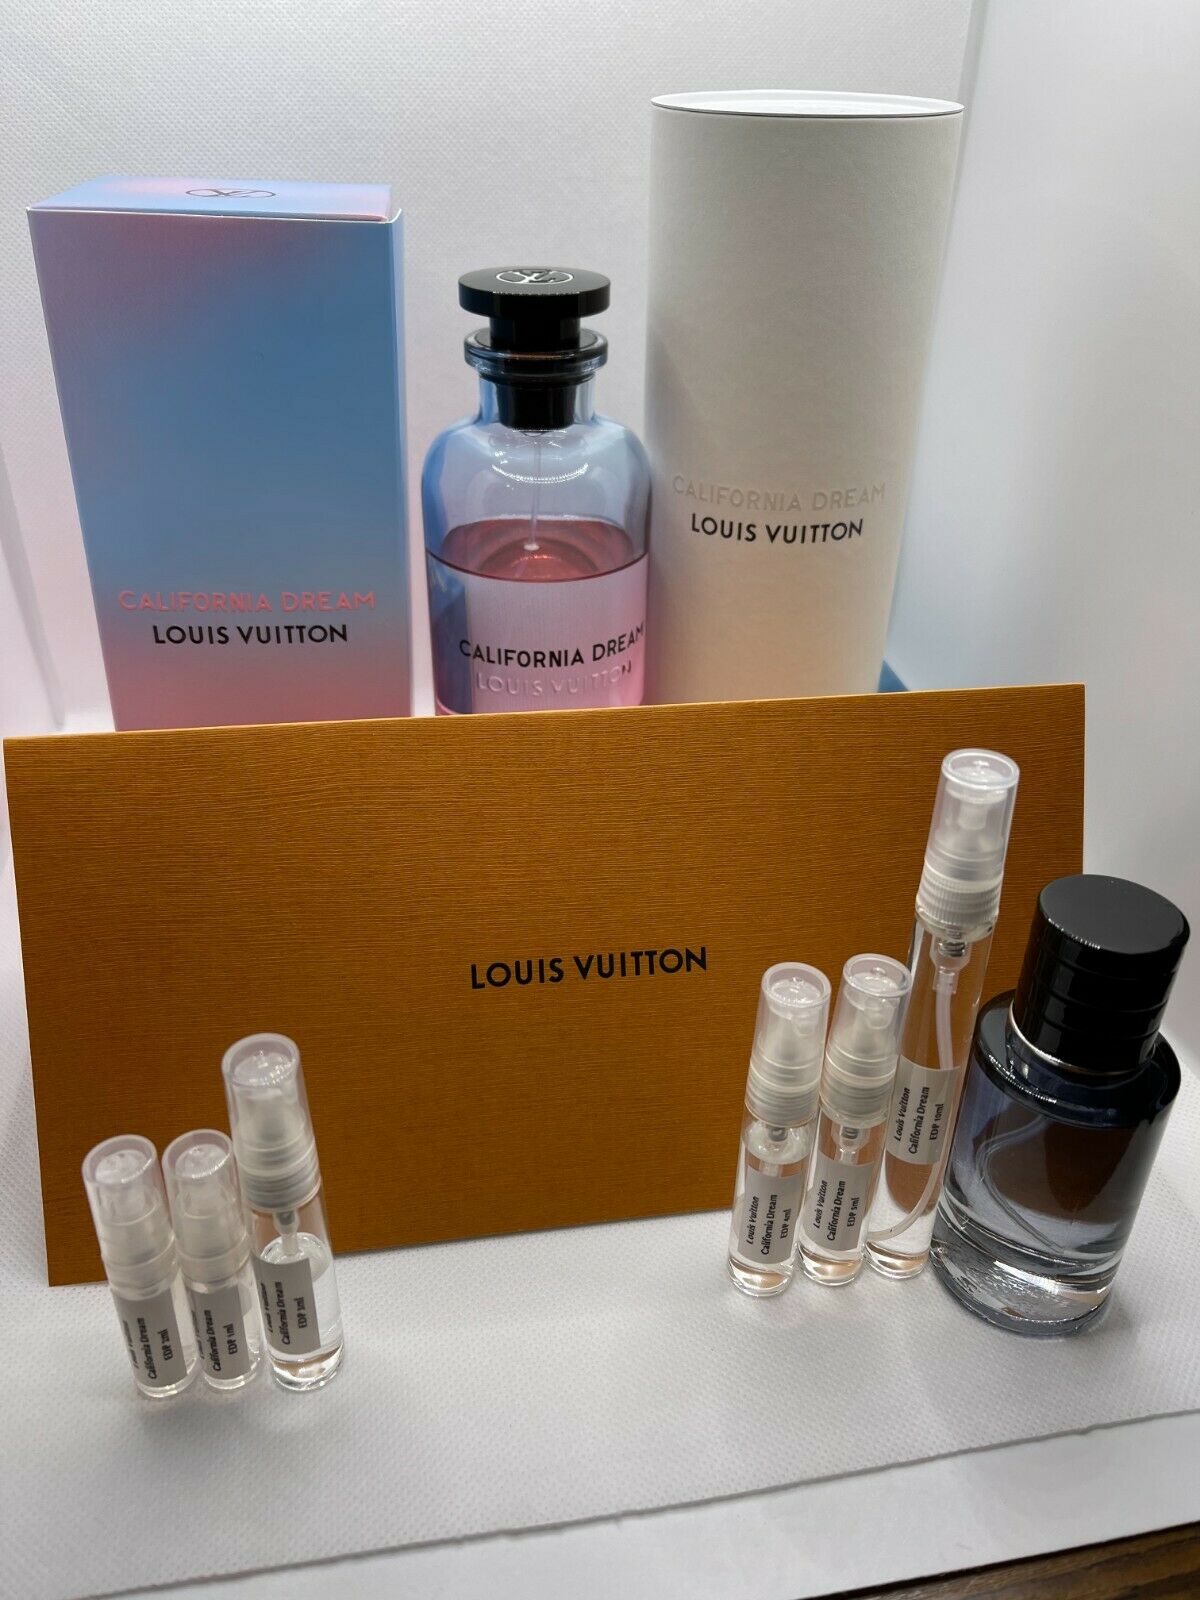  Nước hoa LV  Louis Vuitton Imagination  10ml  Shopee Việt Nam